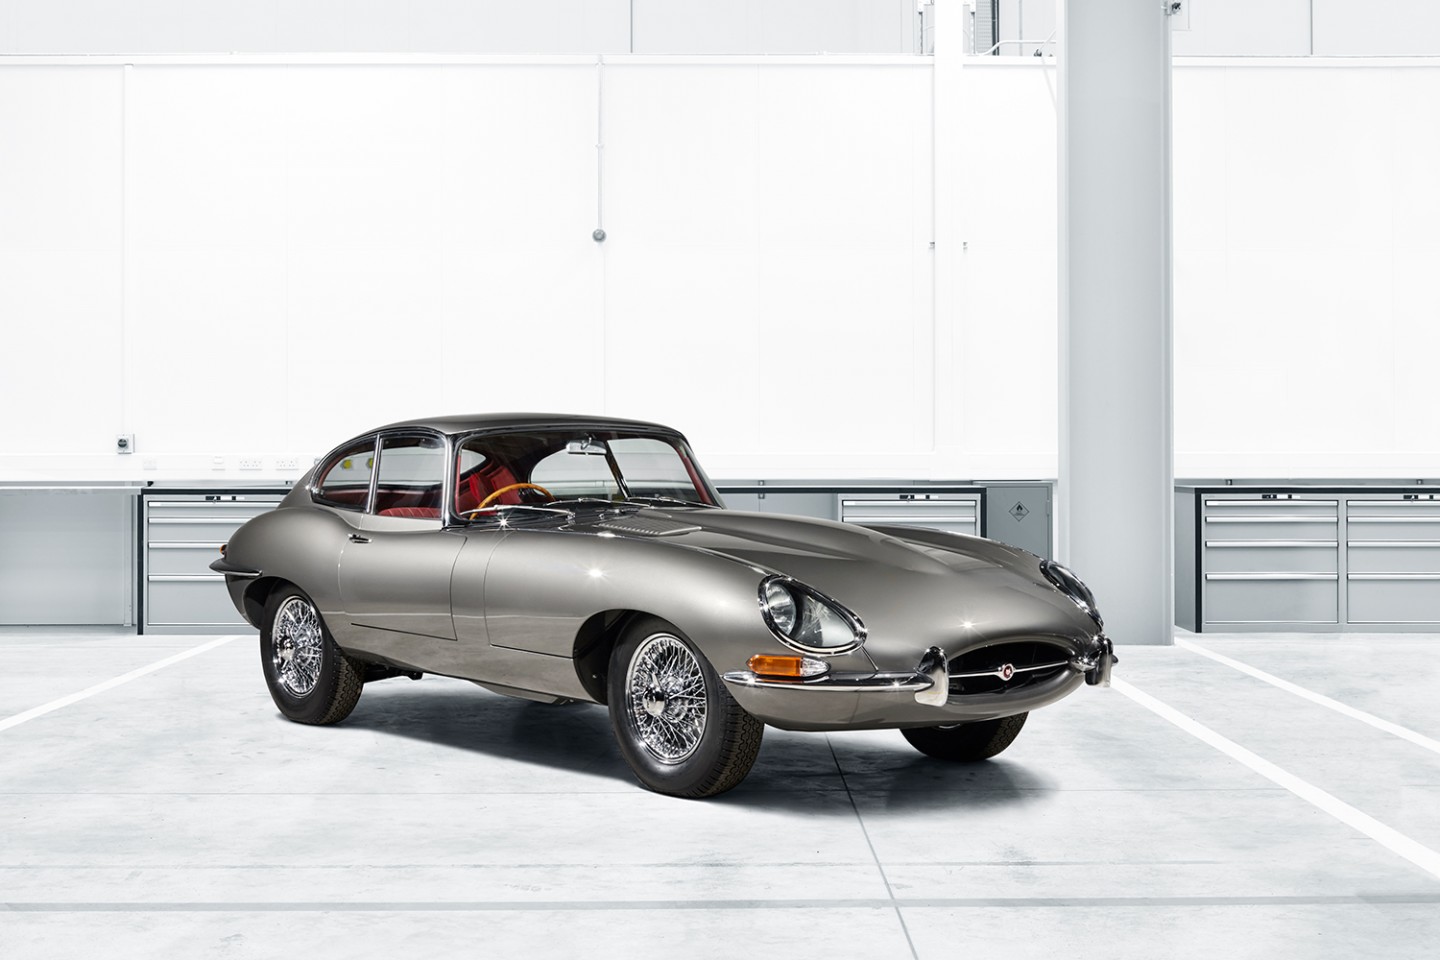 Jaguar Classic